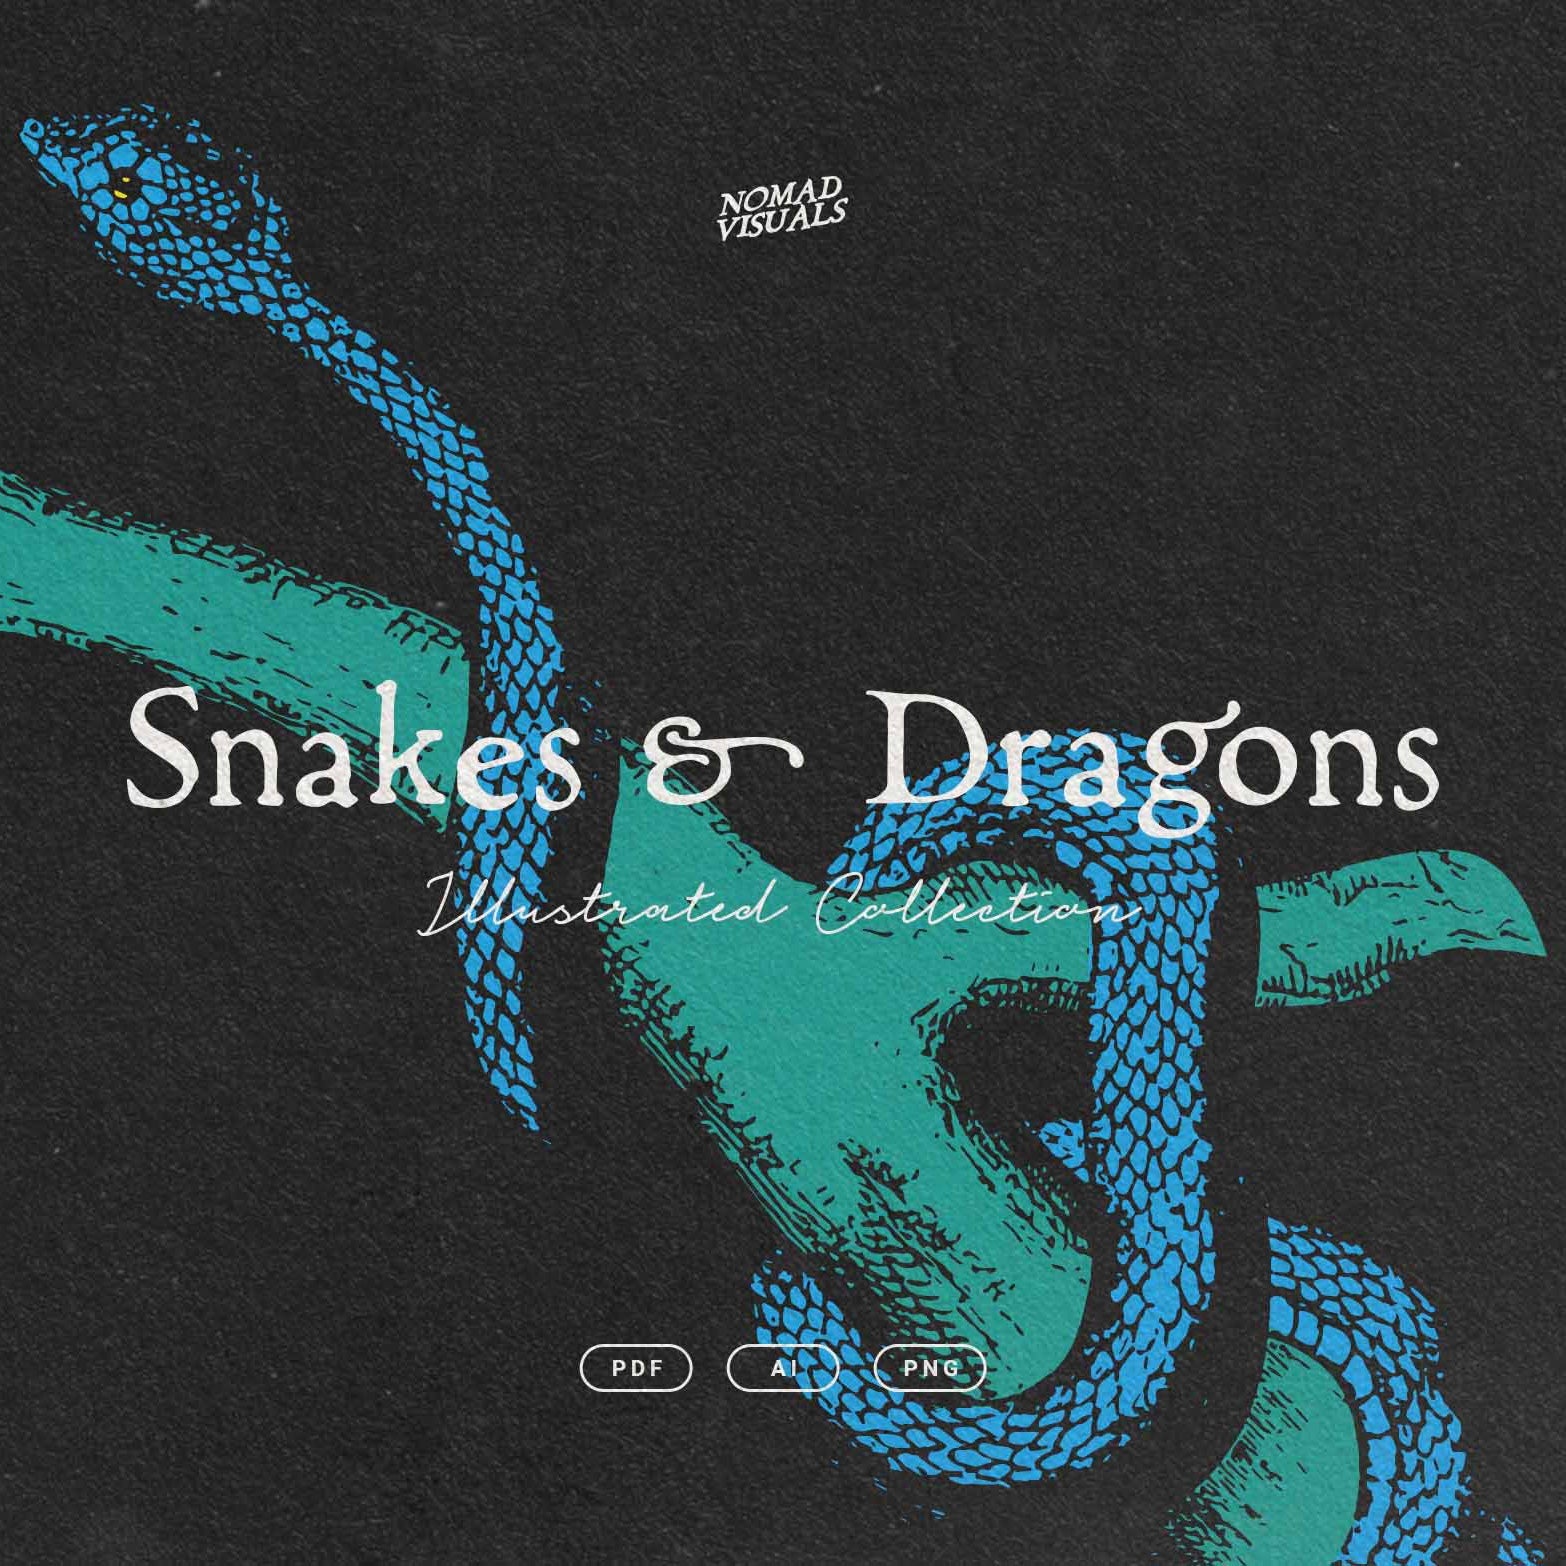 Snakes & Dragons